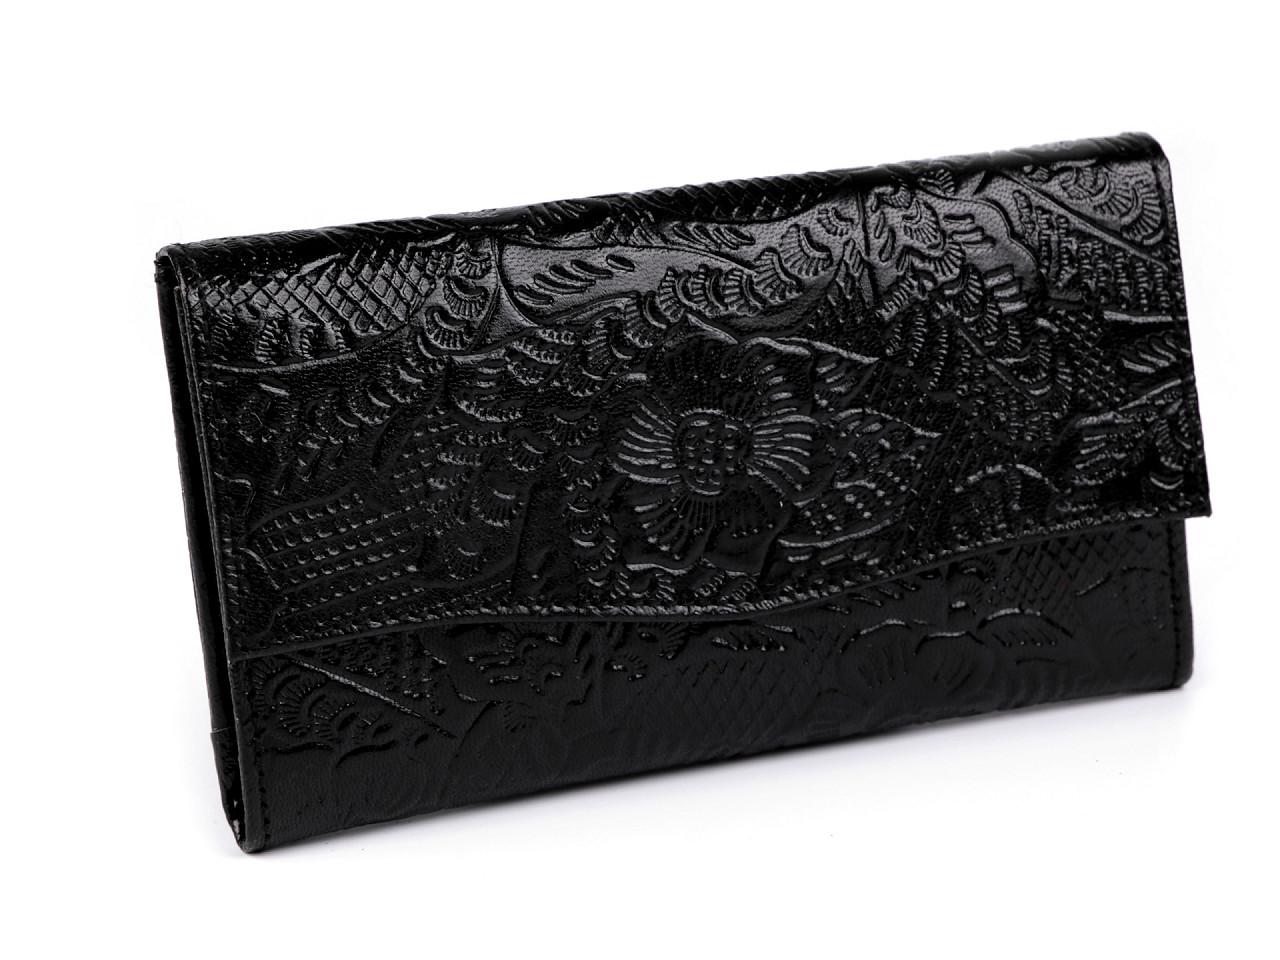 Damen-Geldbörse aus Leder 9x17,5 cm, schwarz, 1 Stück